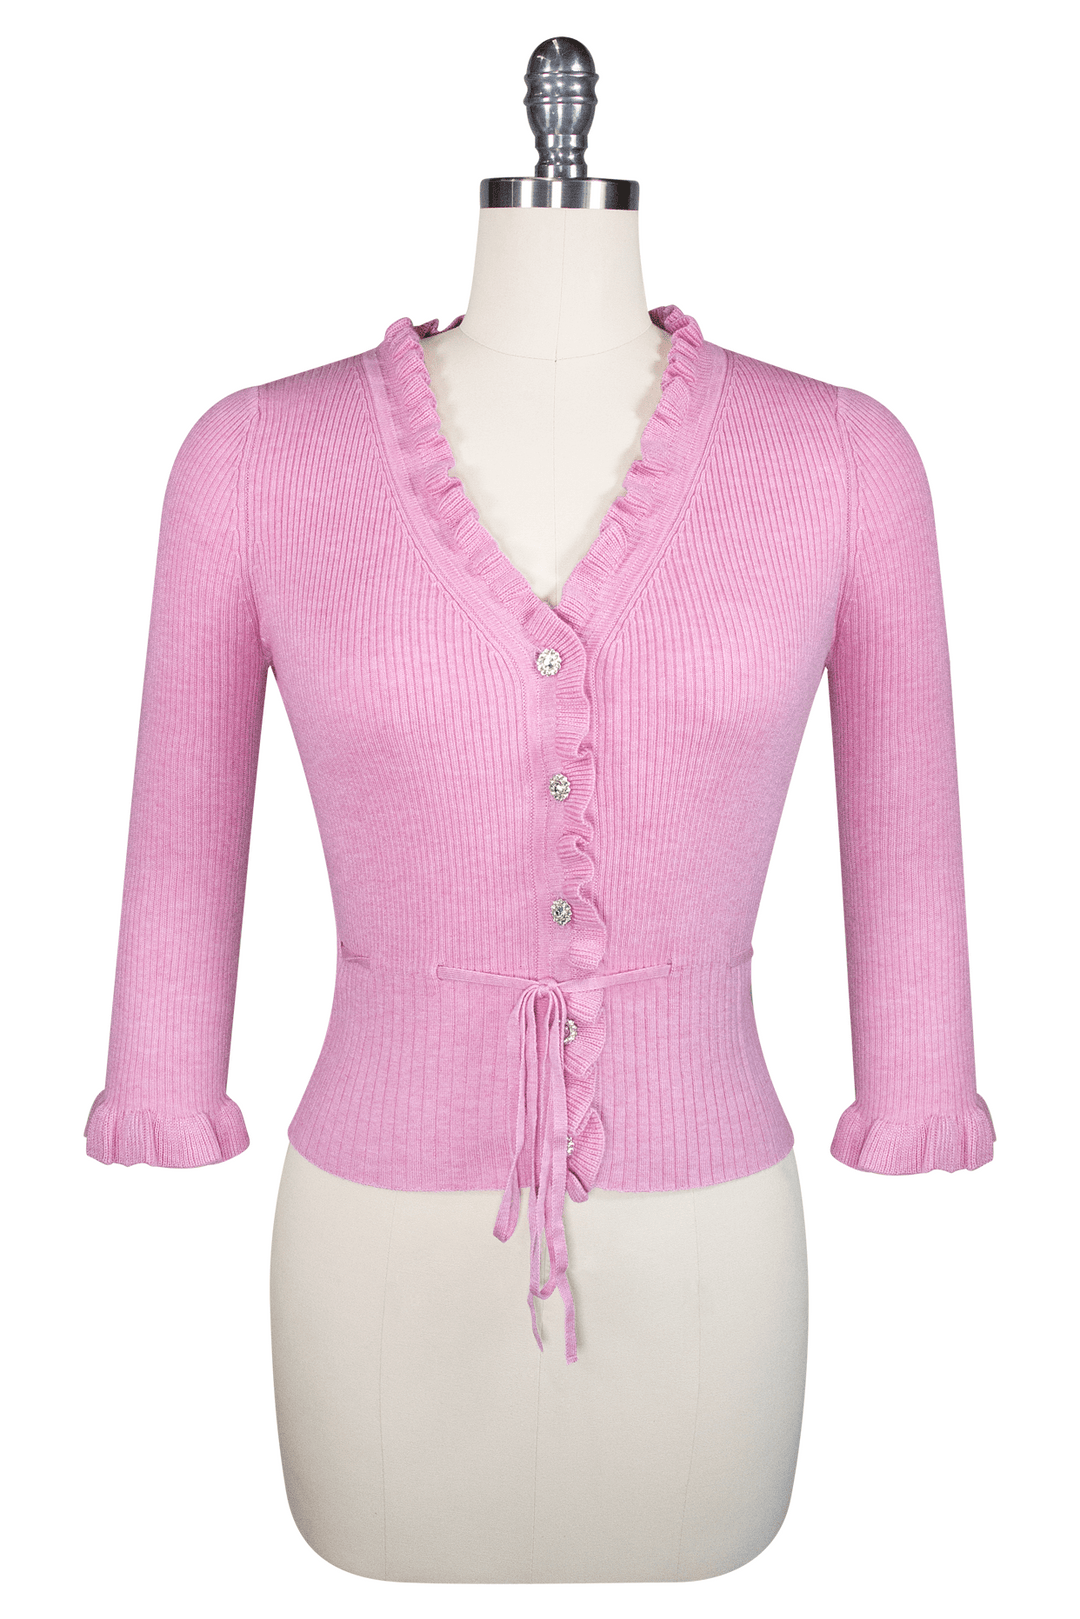 La Luna 3/4 Sleeve Knit Cardigan (Pink) - Kitten D'Amour